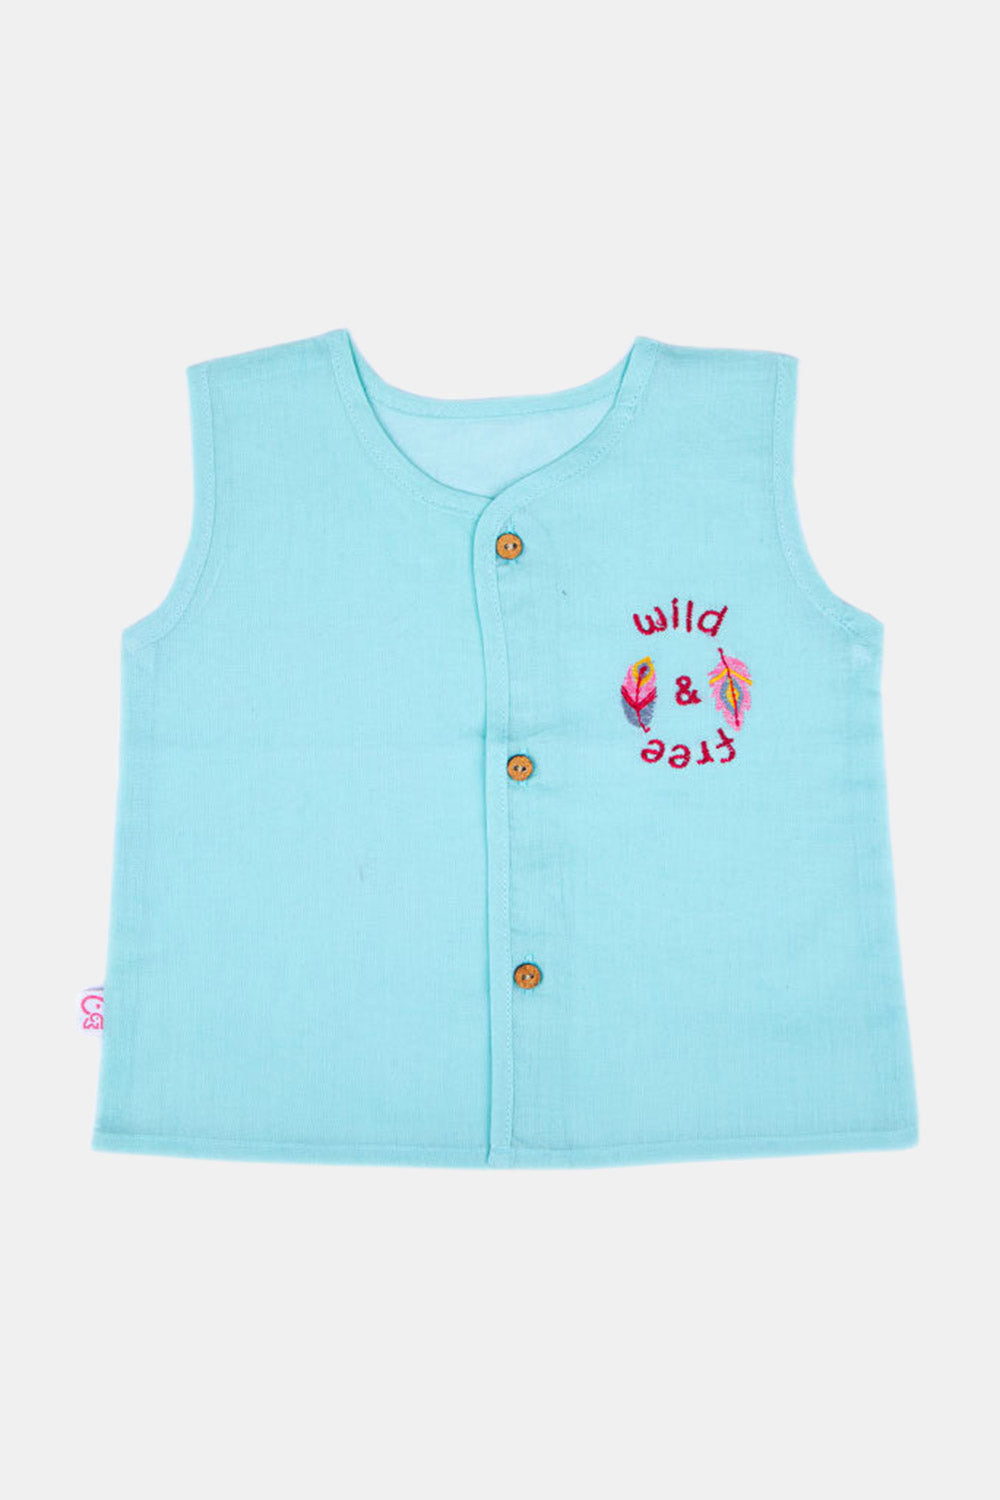 Oh Baby Wild Free Sleeveless Shirt - PV01 Size   0m-3m Color Lemon Yellow